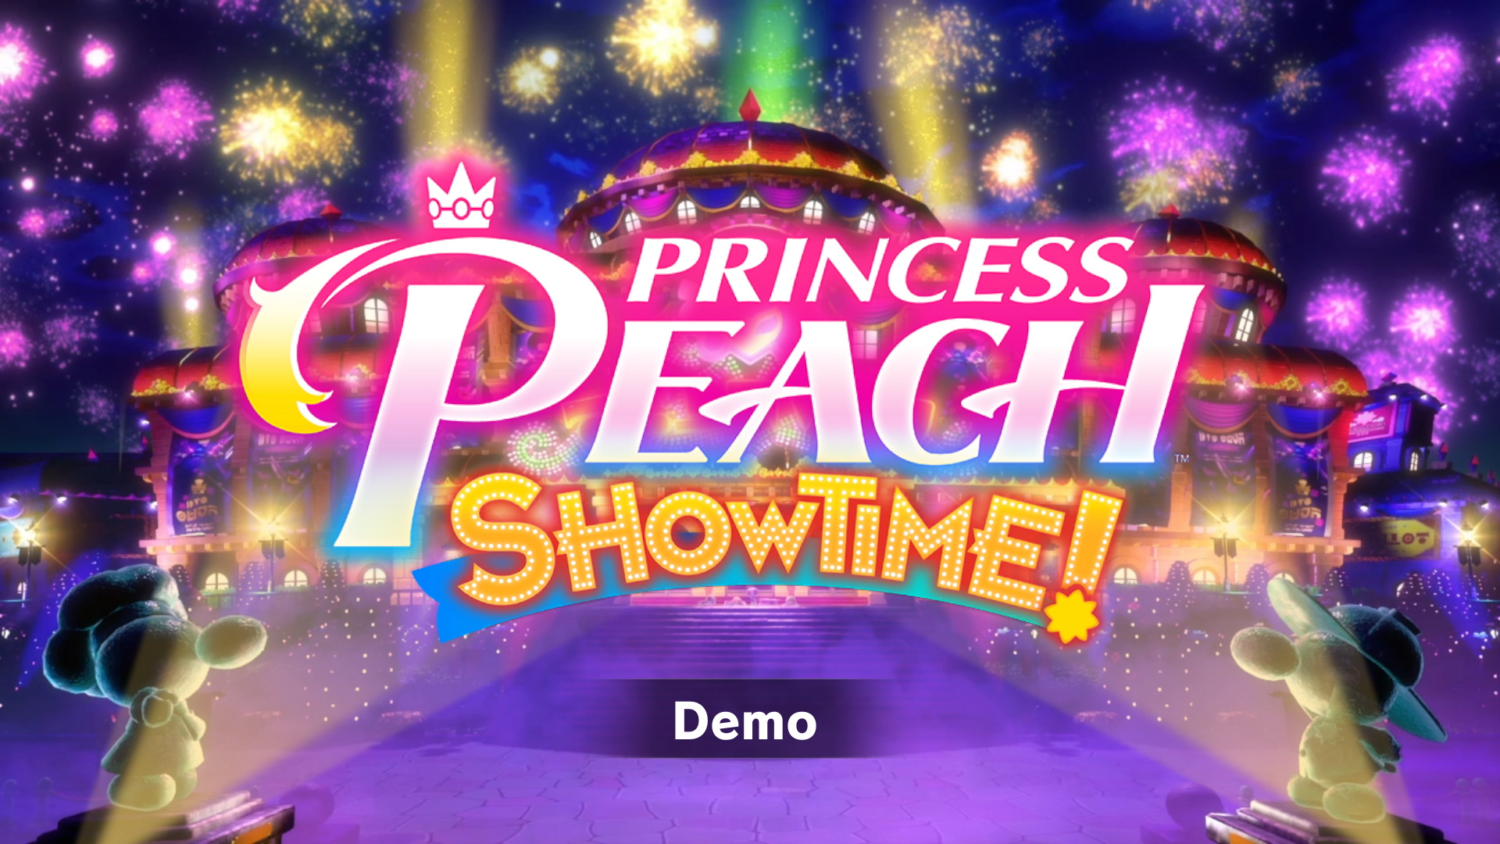 Princess Peach: Showtime! demo: first impressions